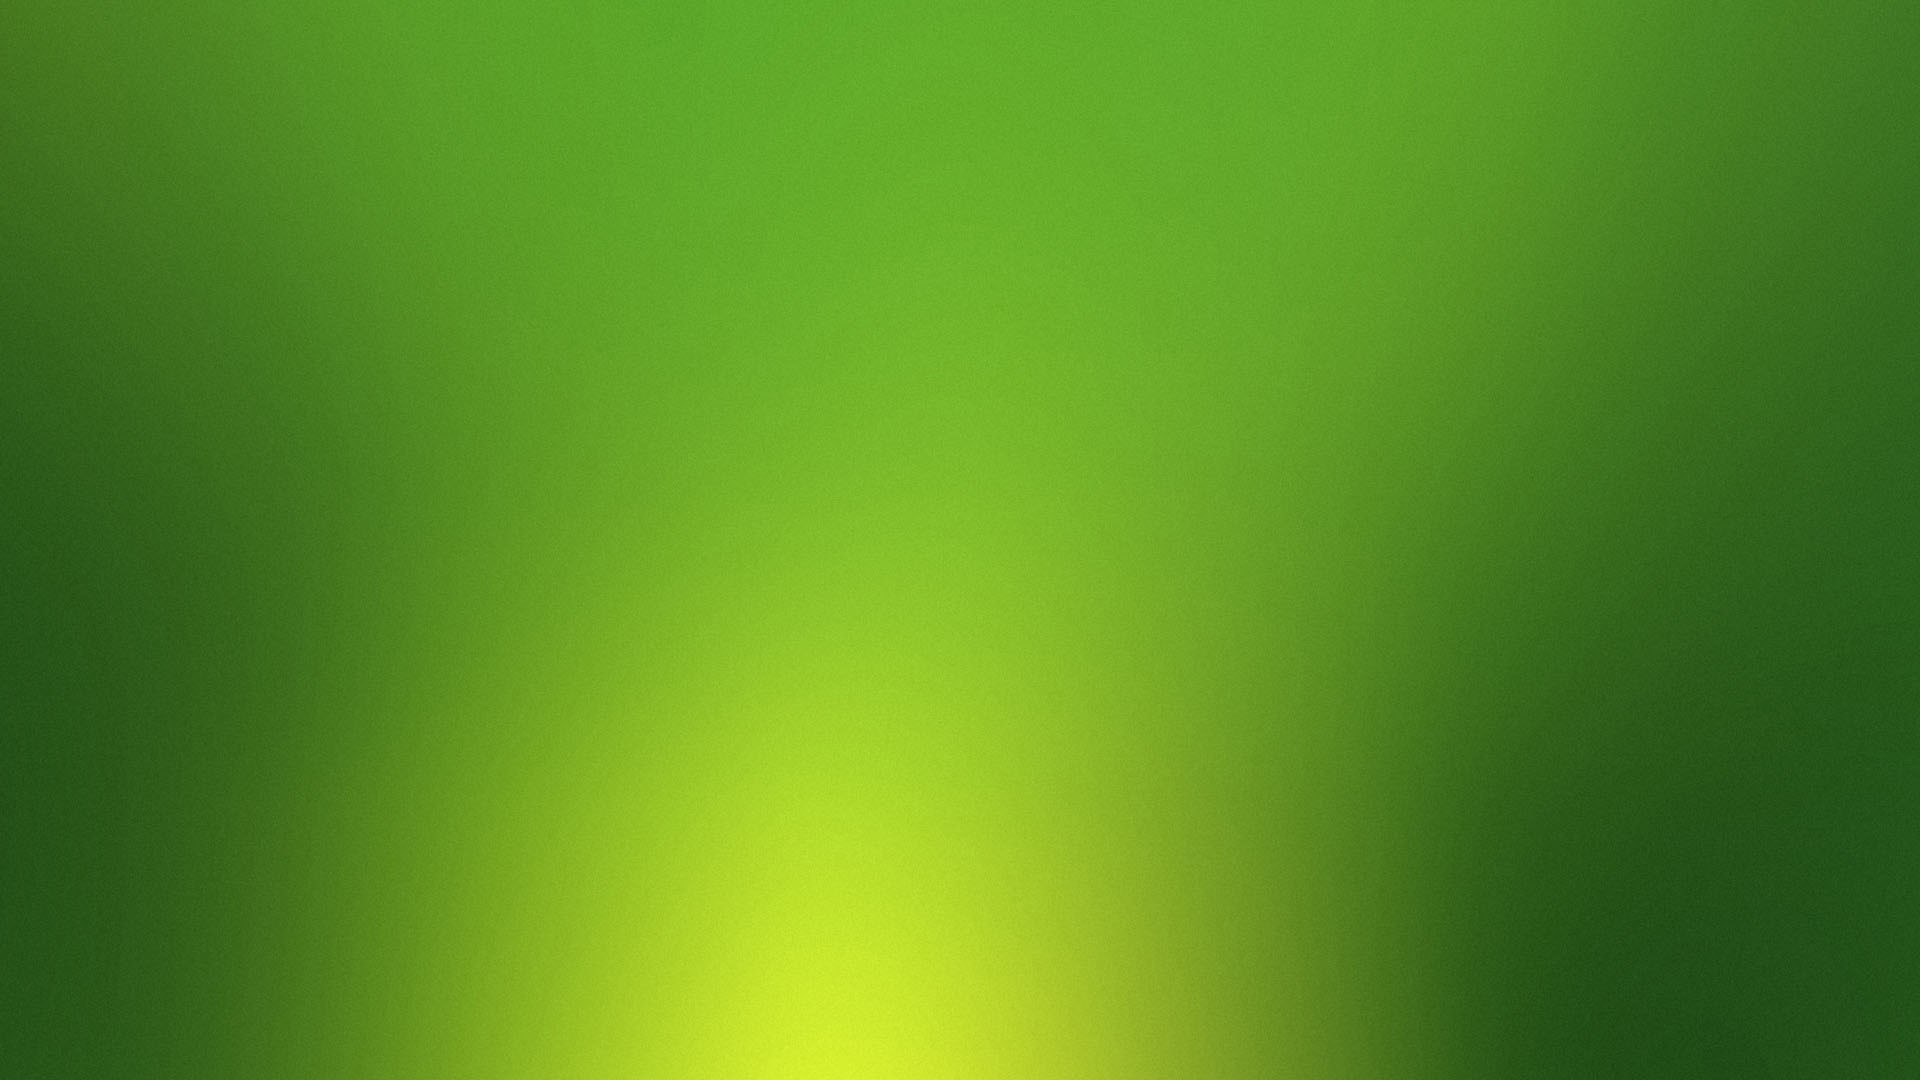 1920x1080 Plain Green Backgrounds